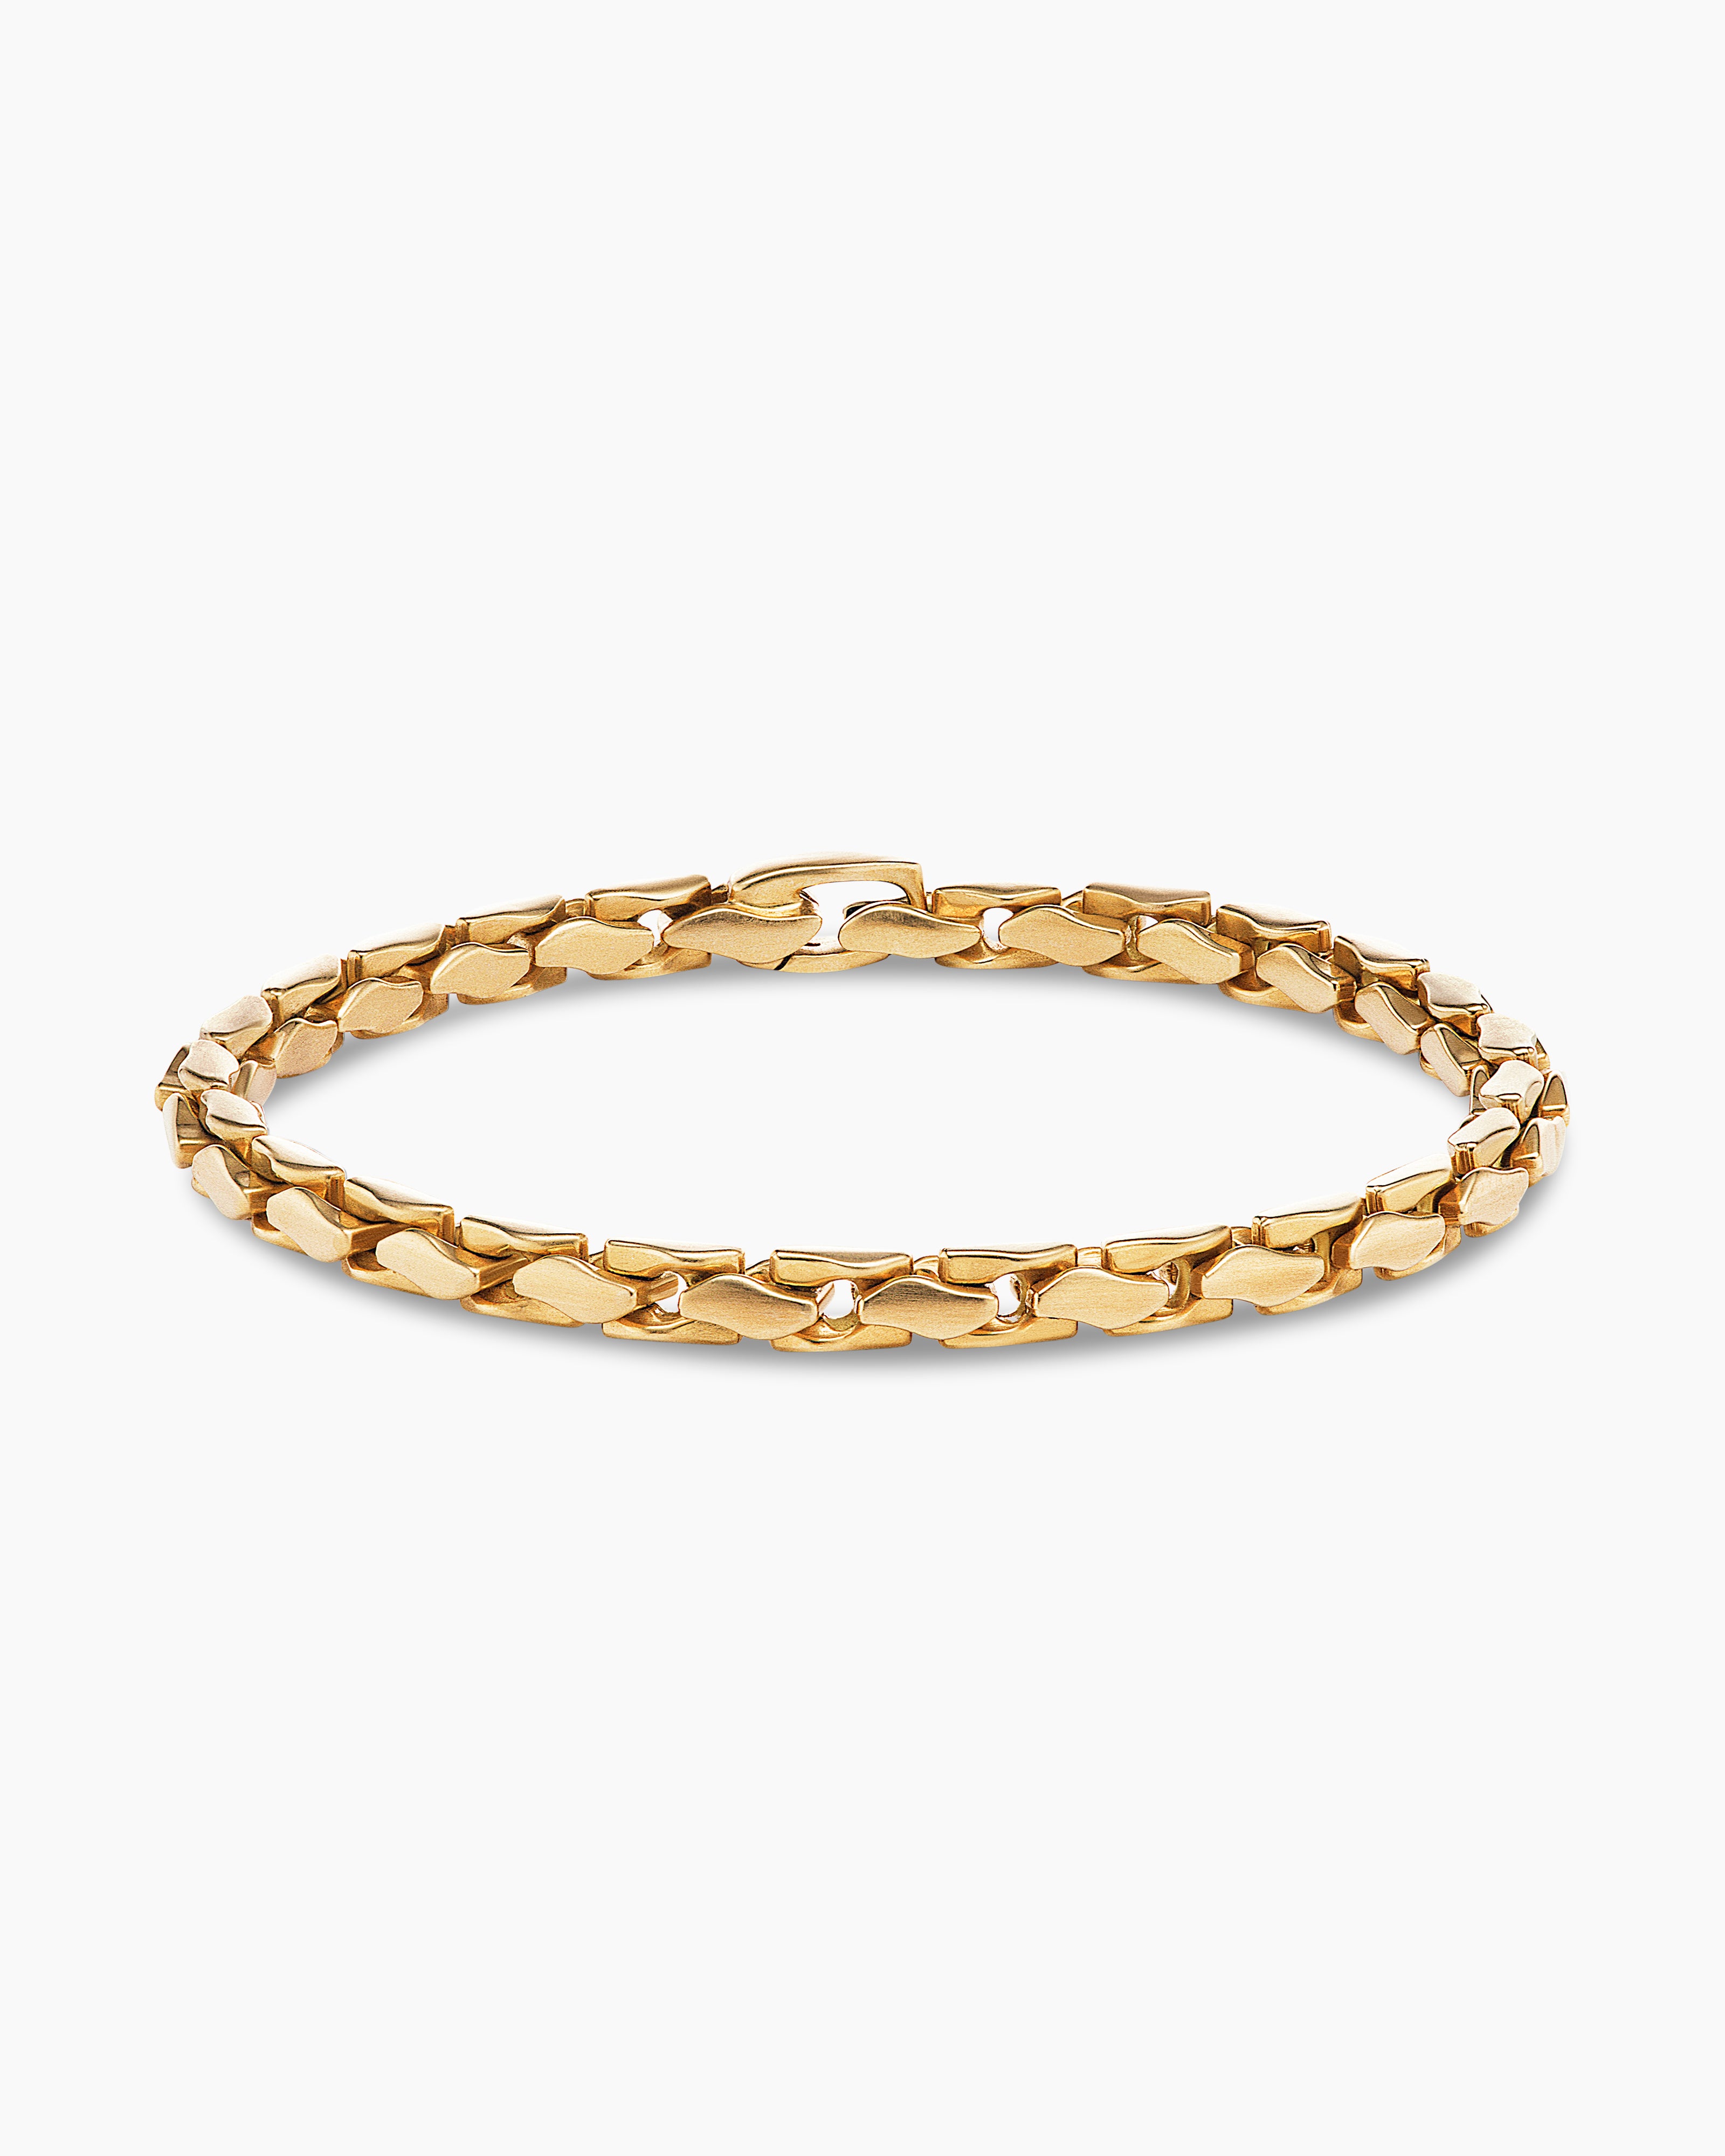 Chain Clasp Bangle Bracelet One Size / Gold